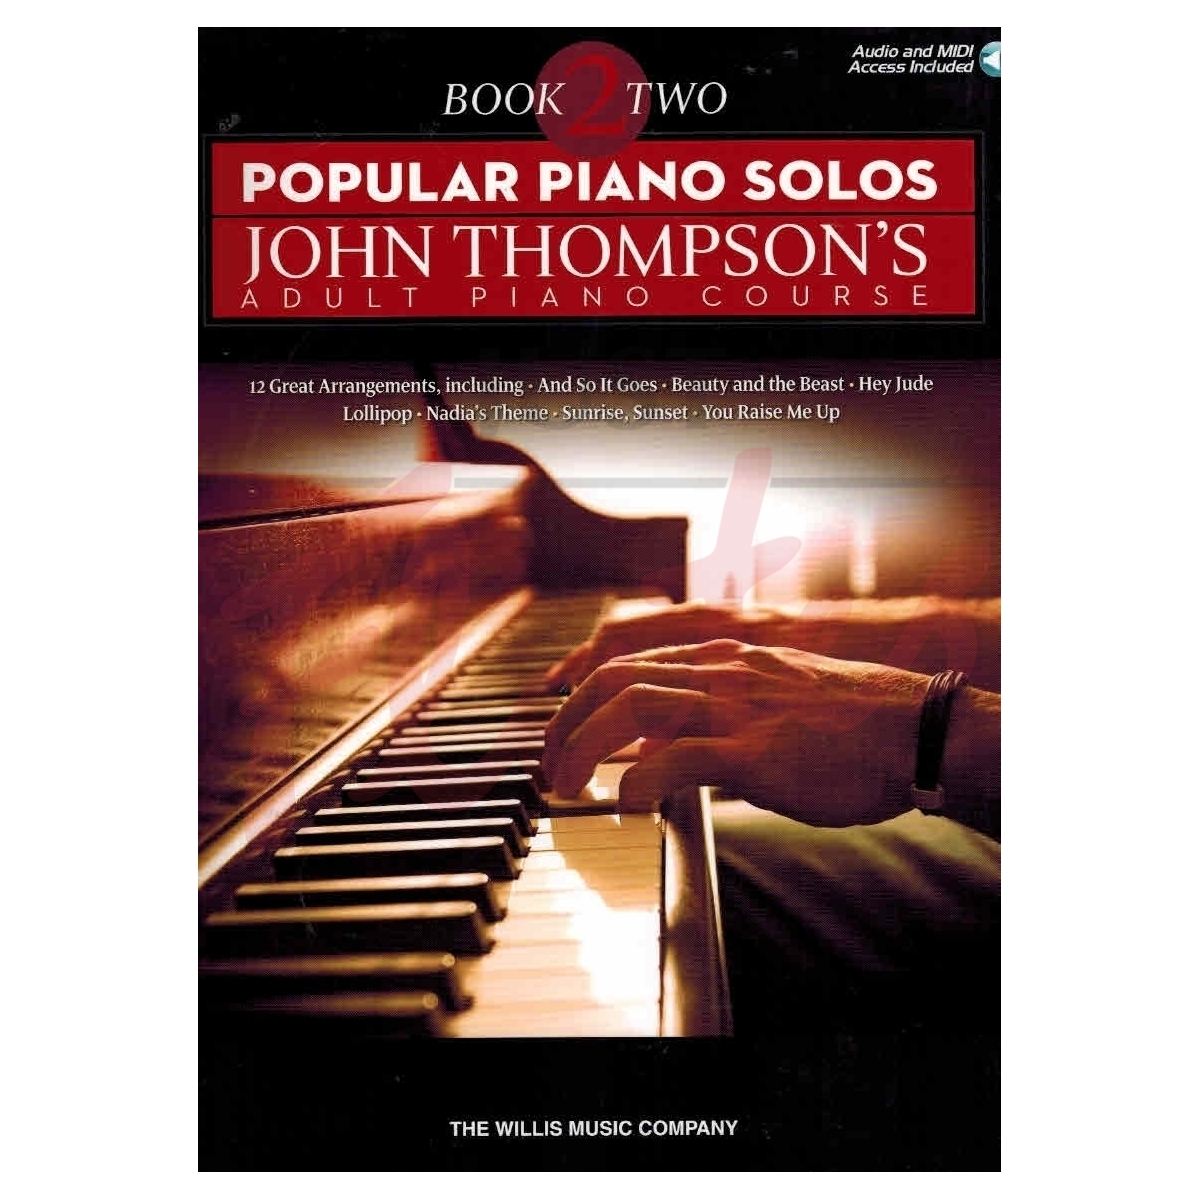 John Thompson's Adult Piano Course - Popular Piano Solos Book 2